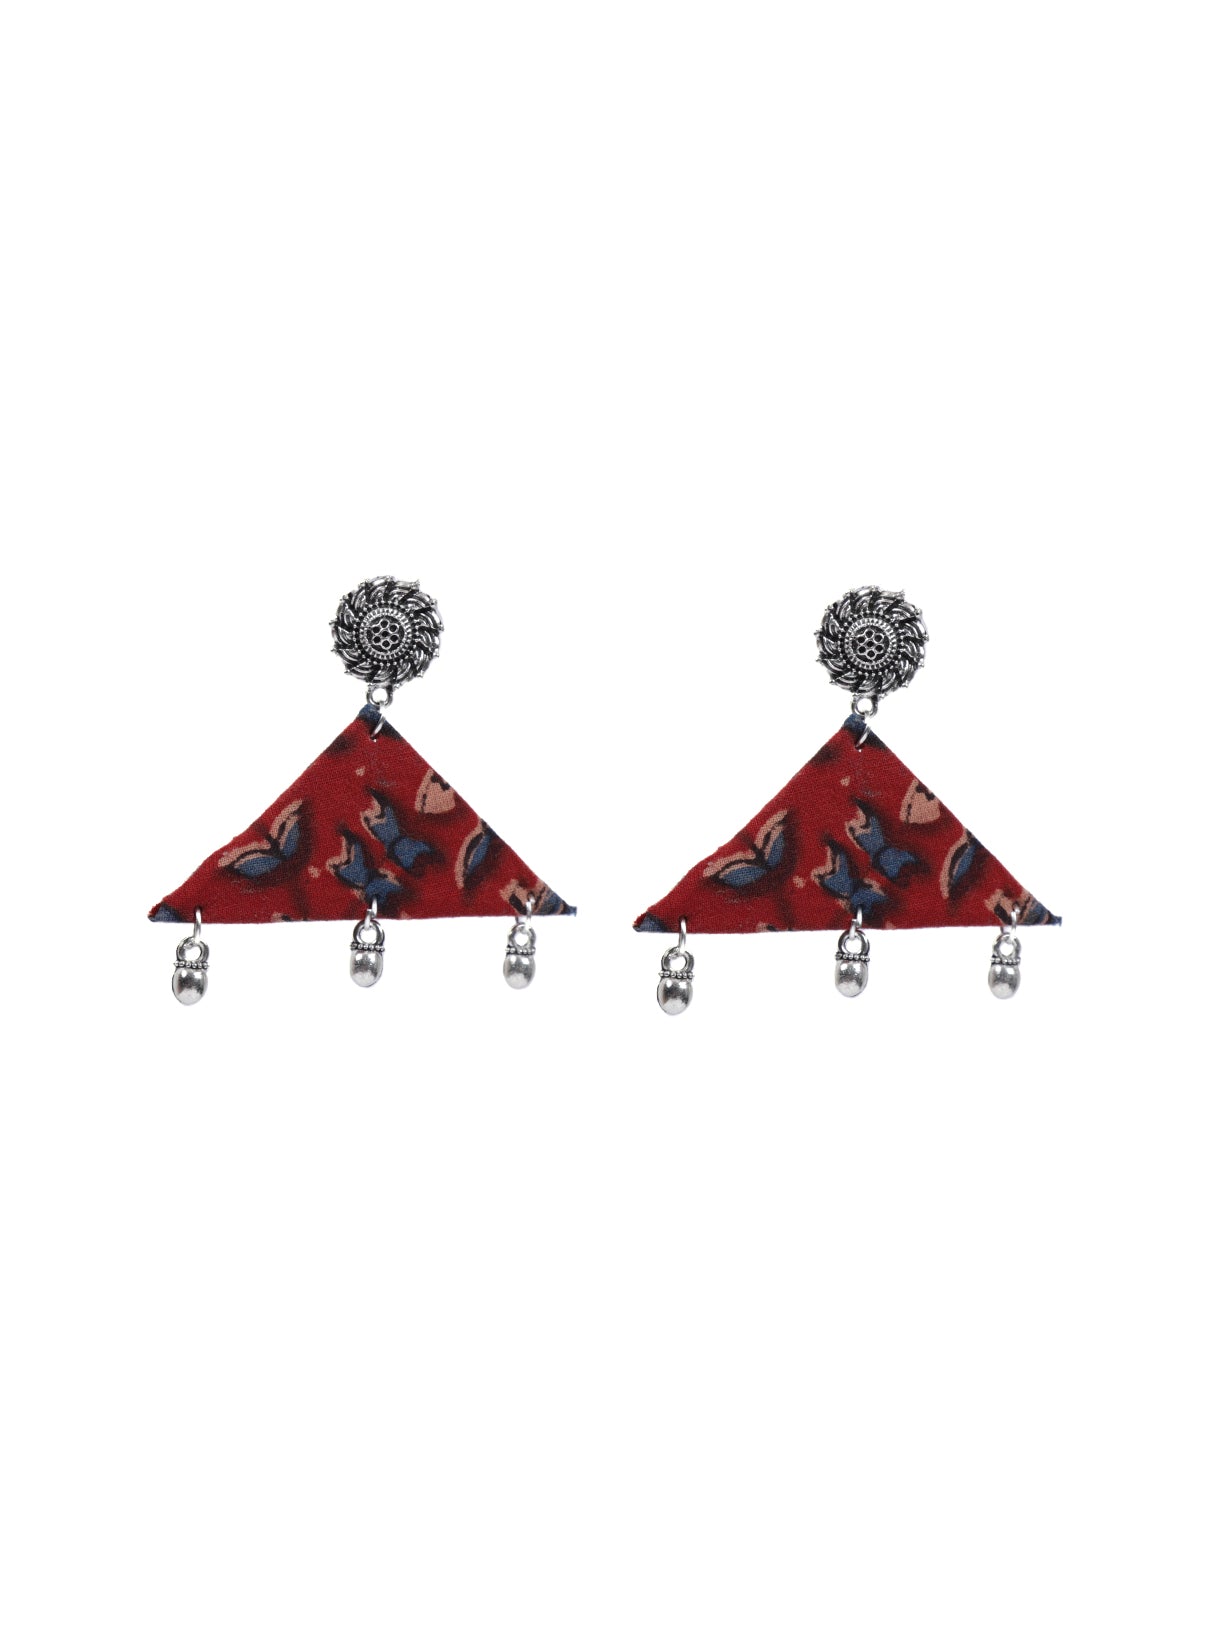 Kalamkari Fabric Earrings with Metal Charms